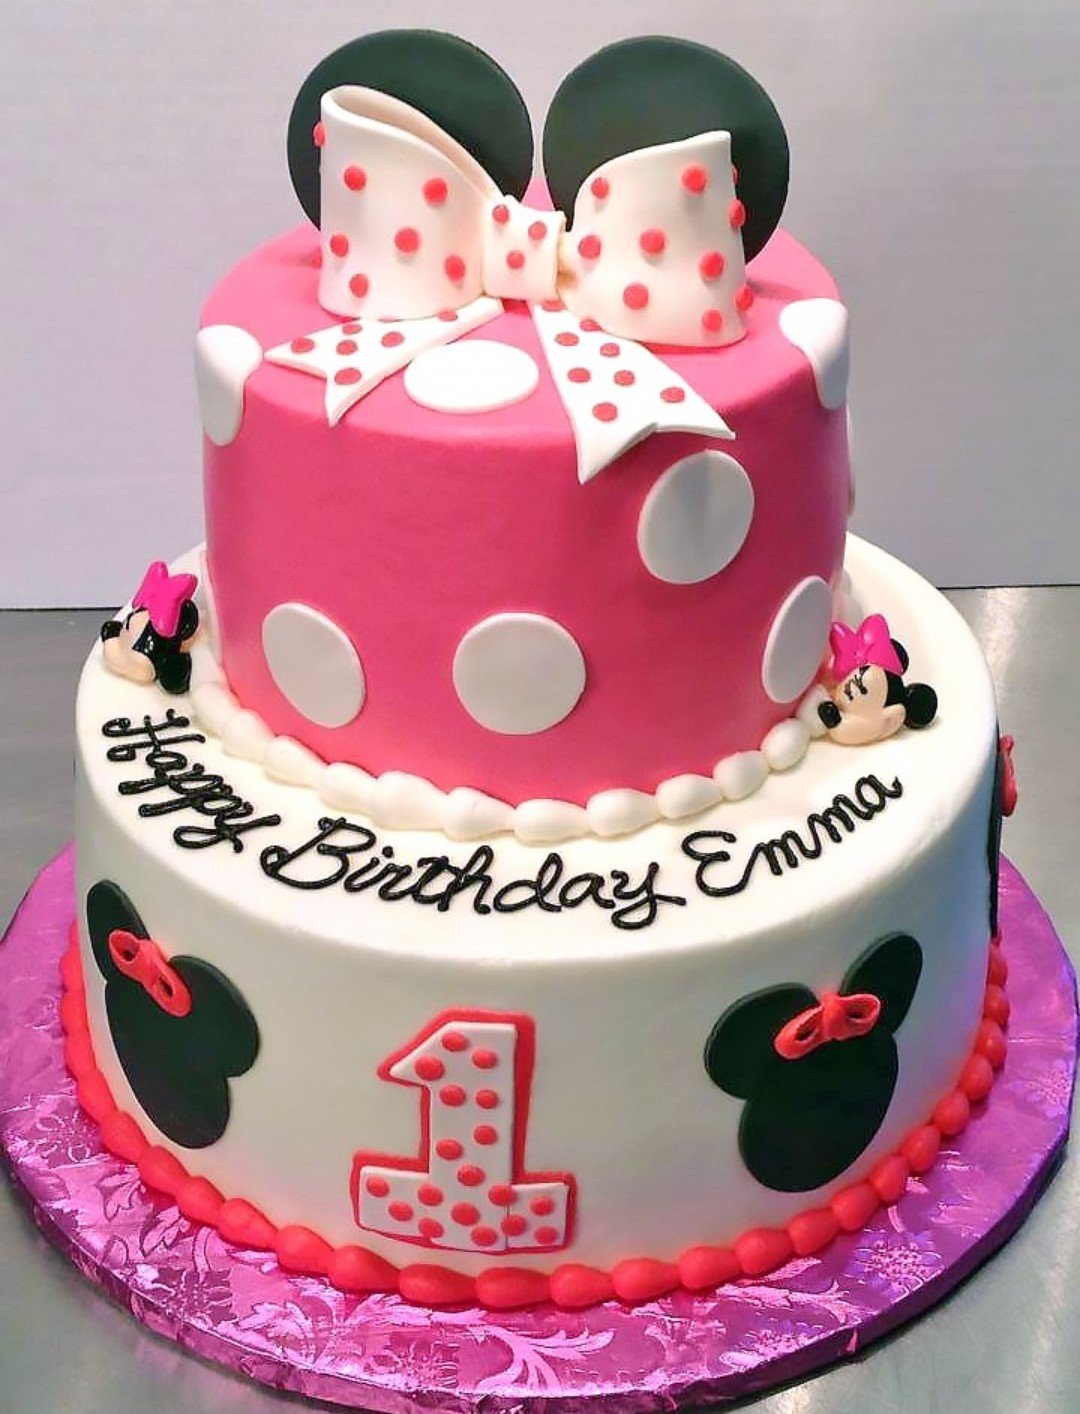 Baby one birthday cake